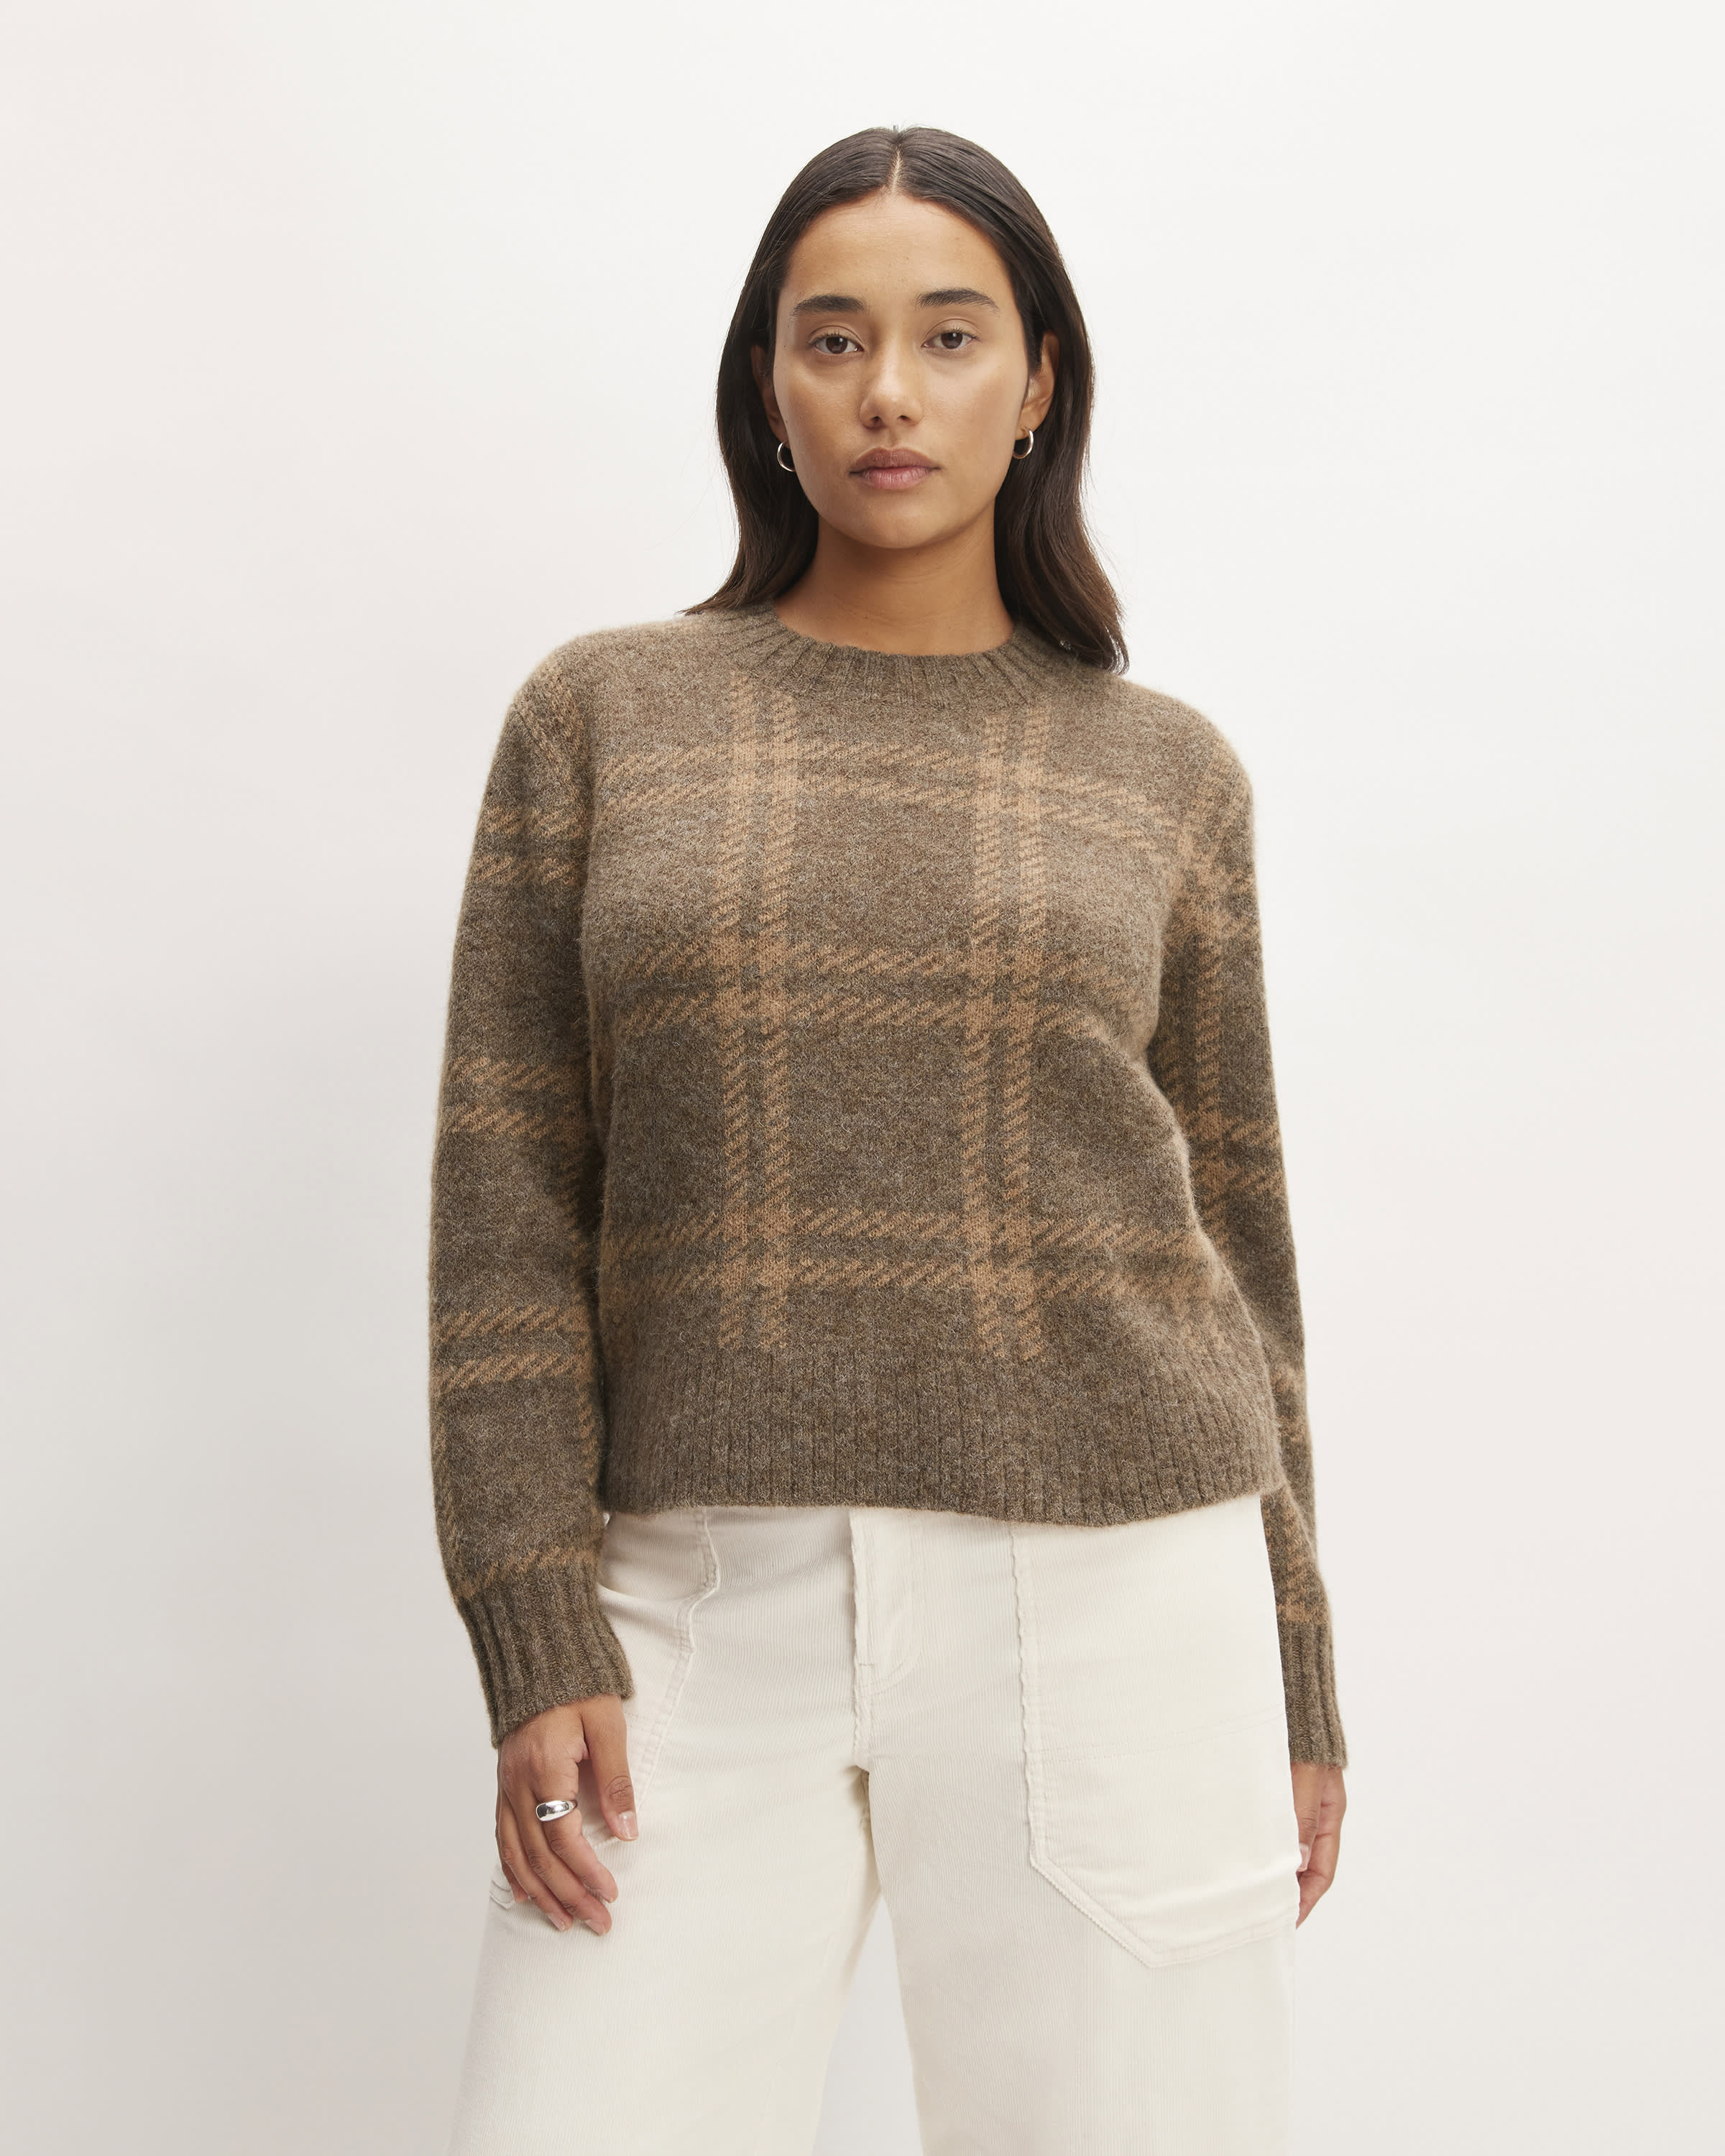 The Alpaca Cropped Crewneck Sweater